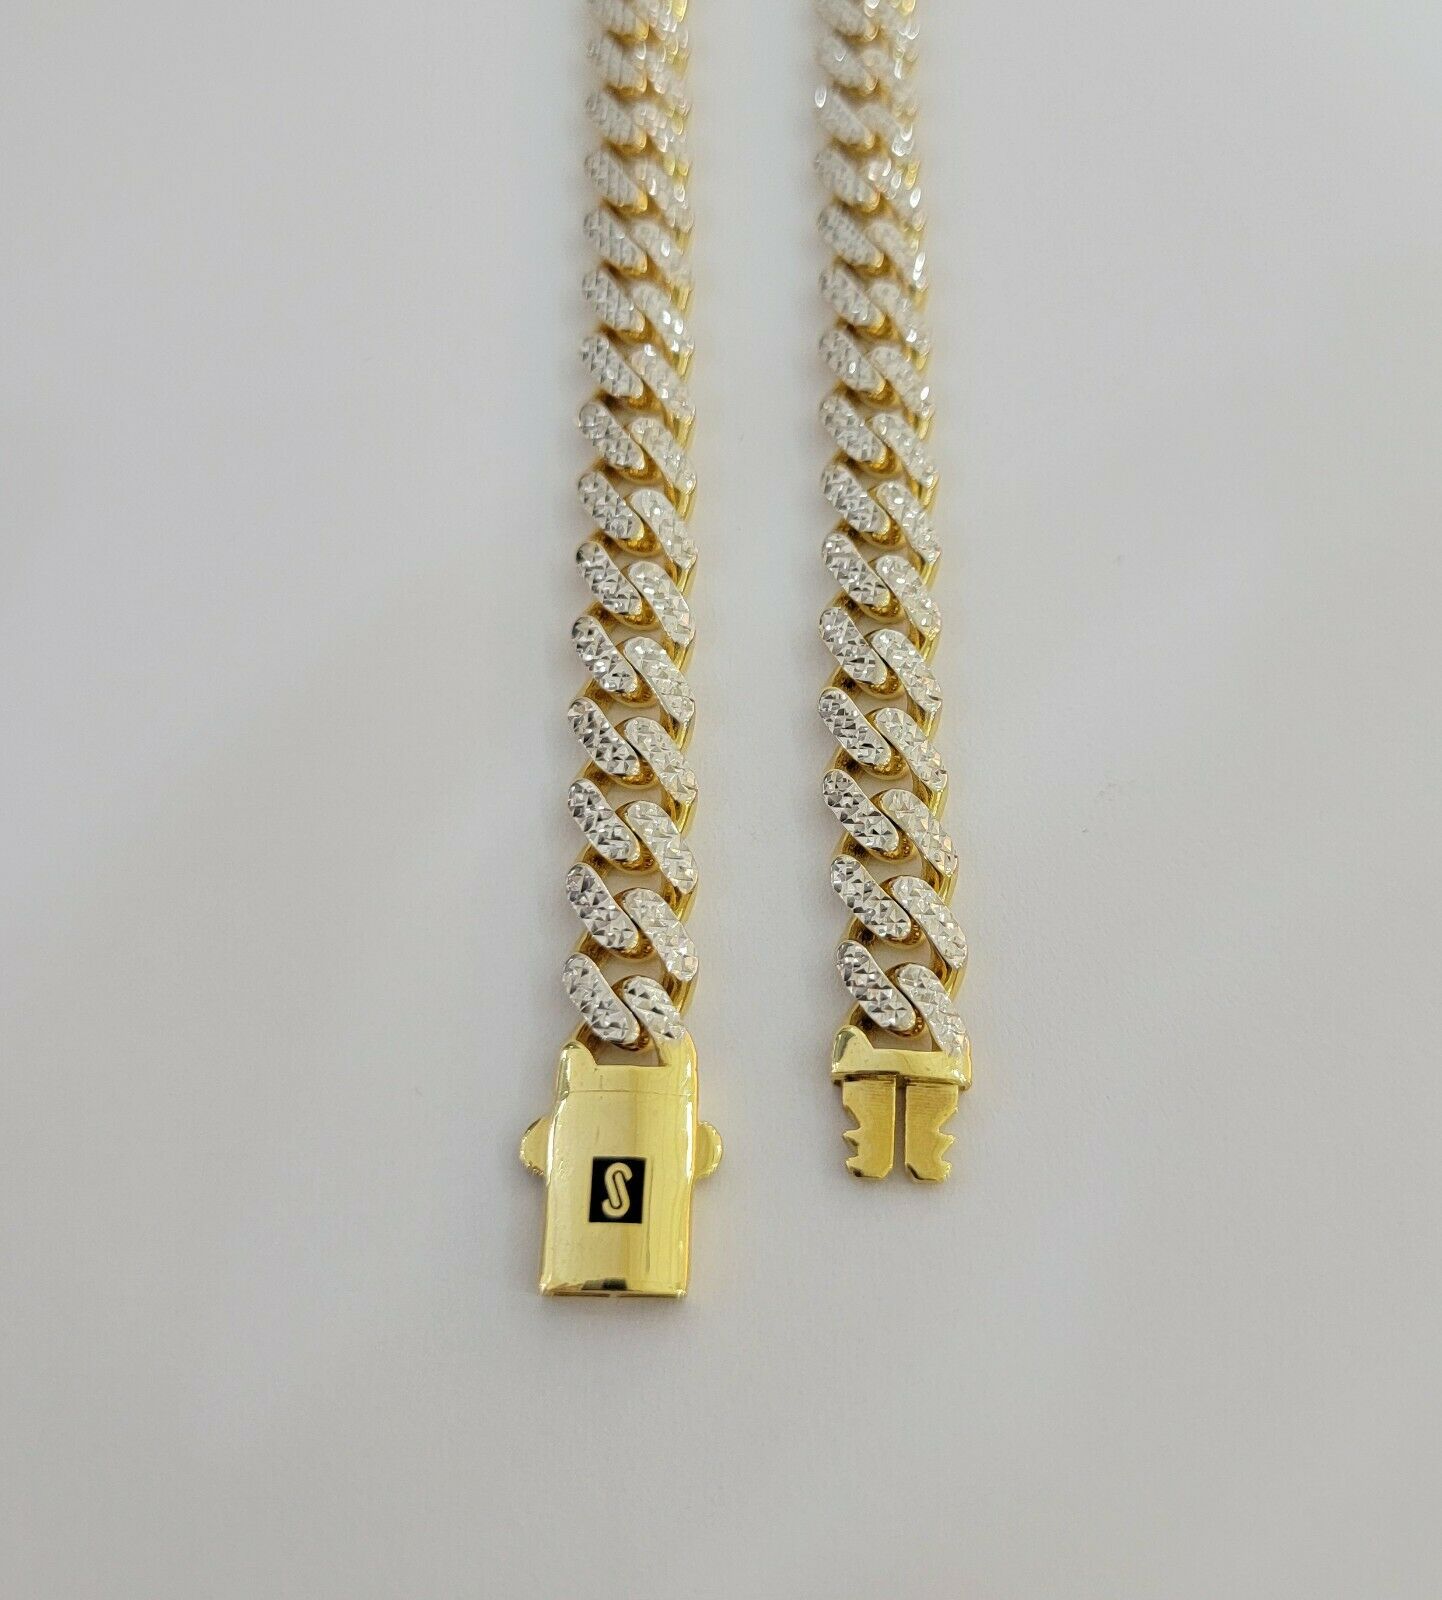 10k Gold Monaco Chain Necklace 7mm 22